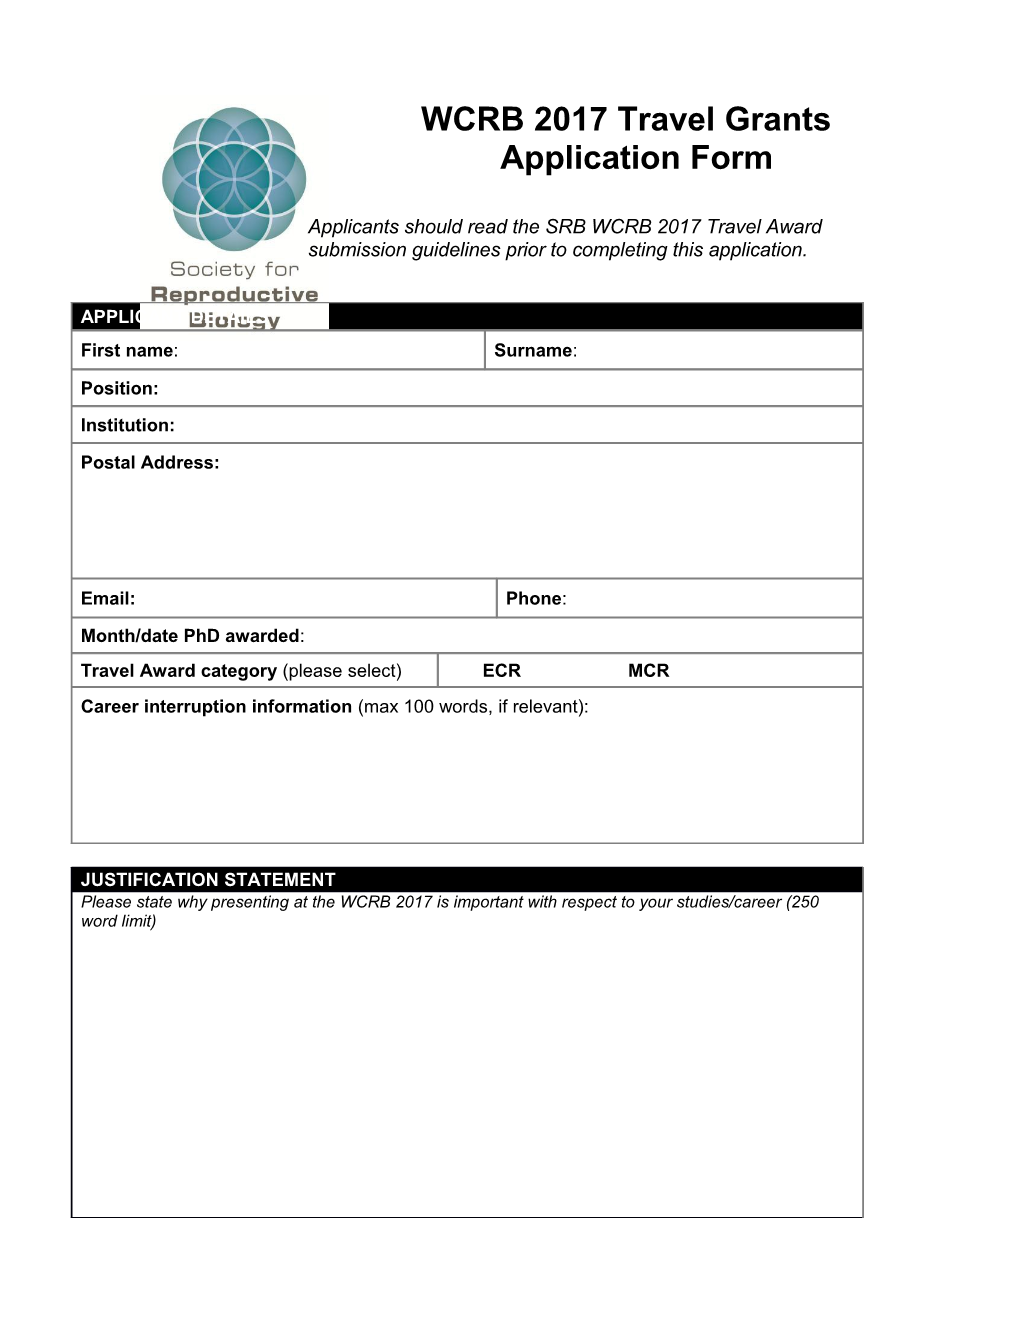 SRB Travel Grant Form 2011